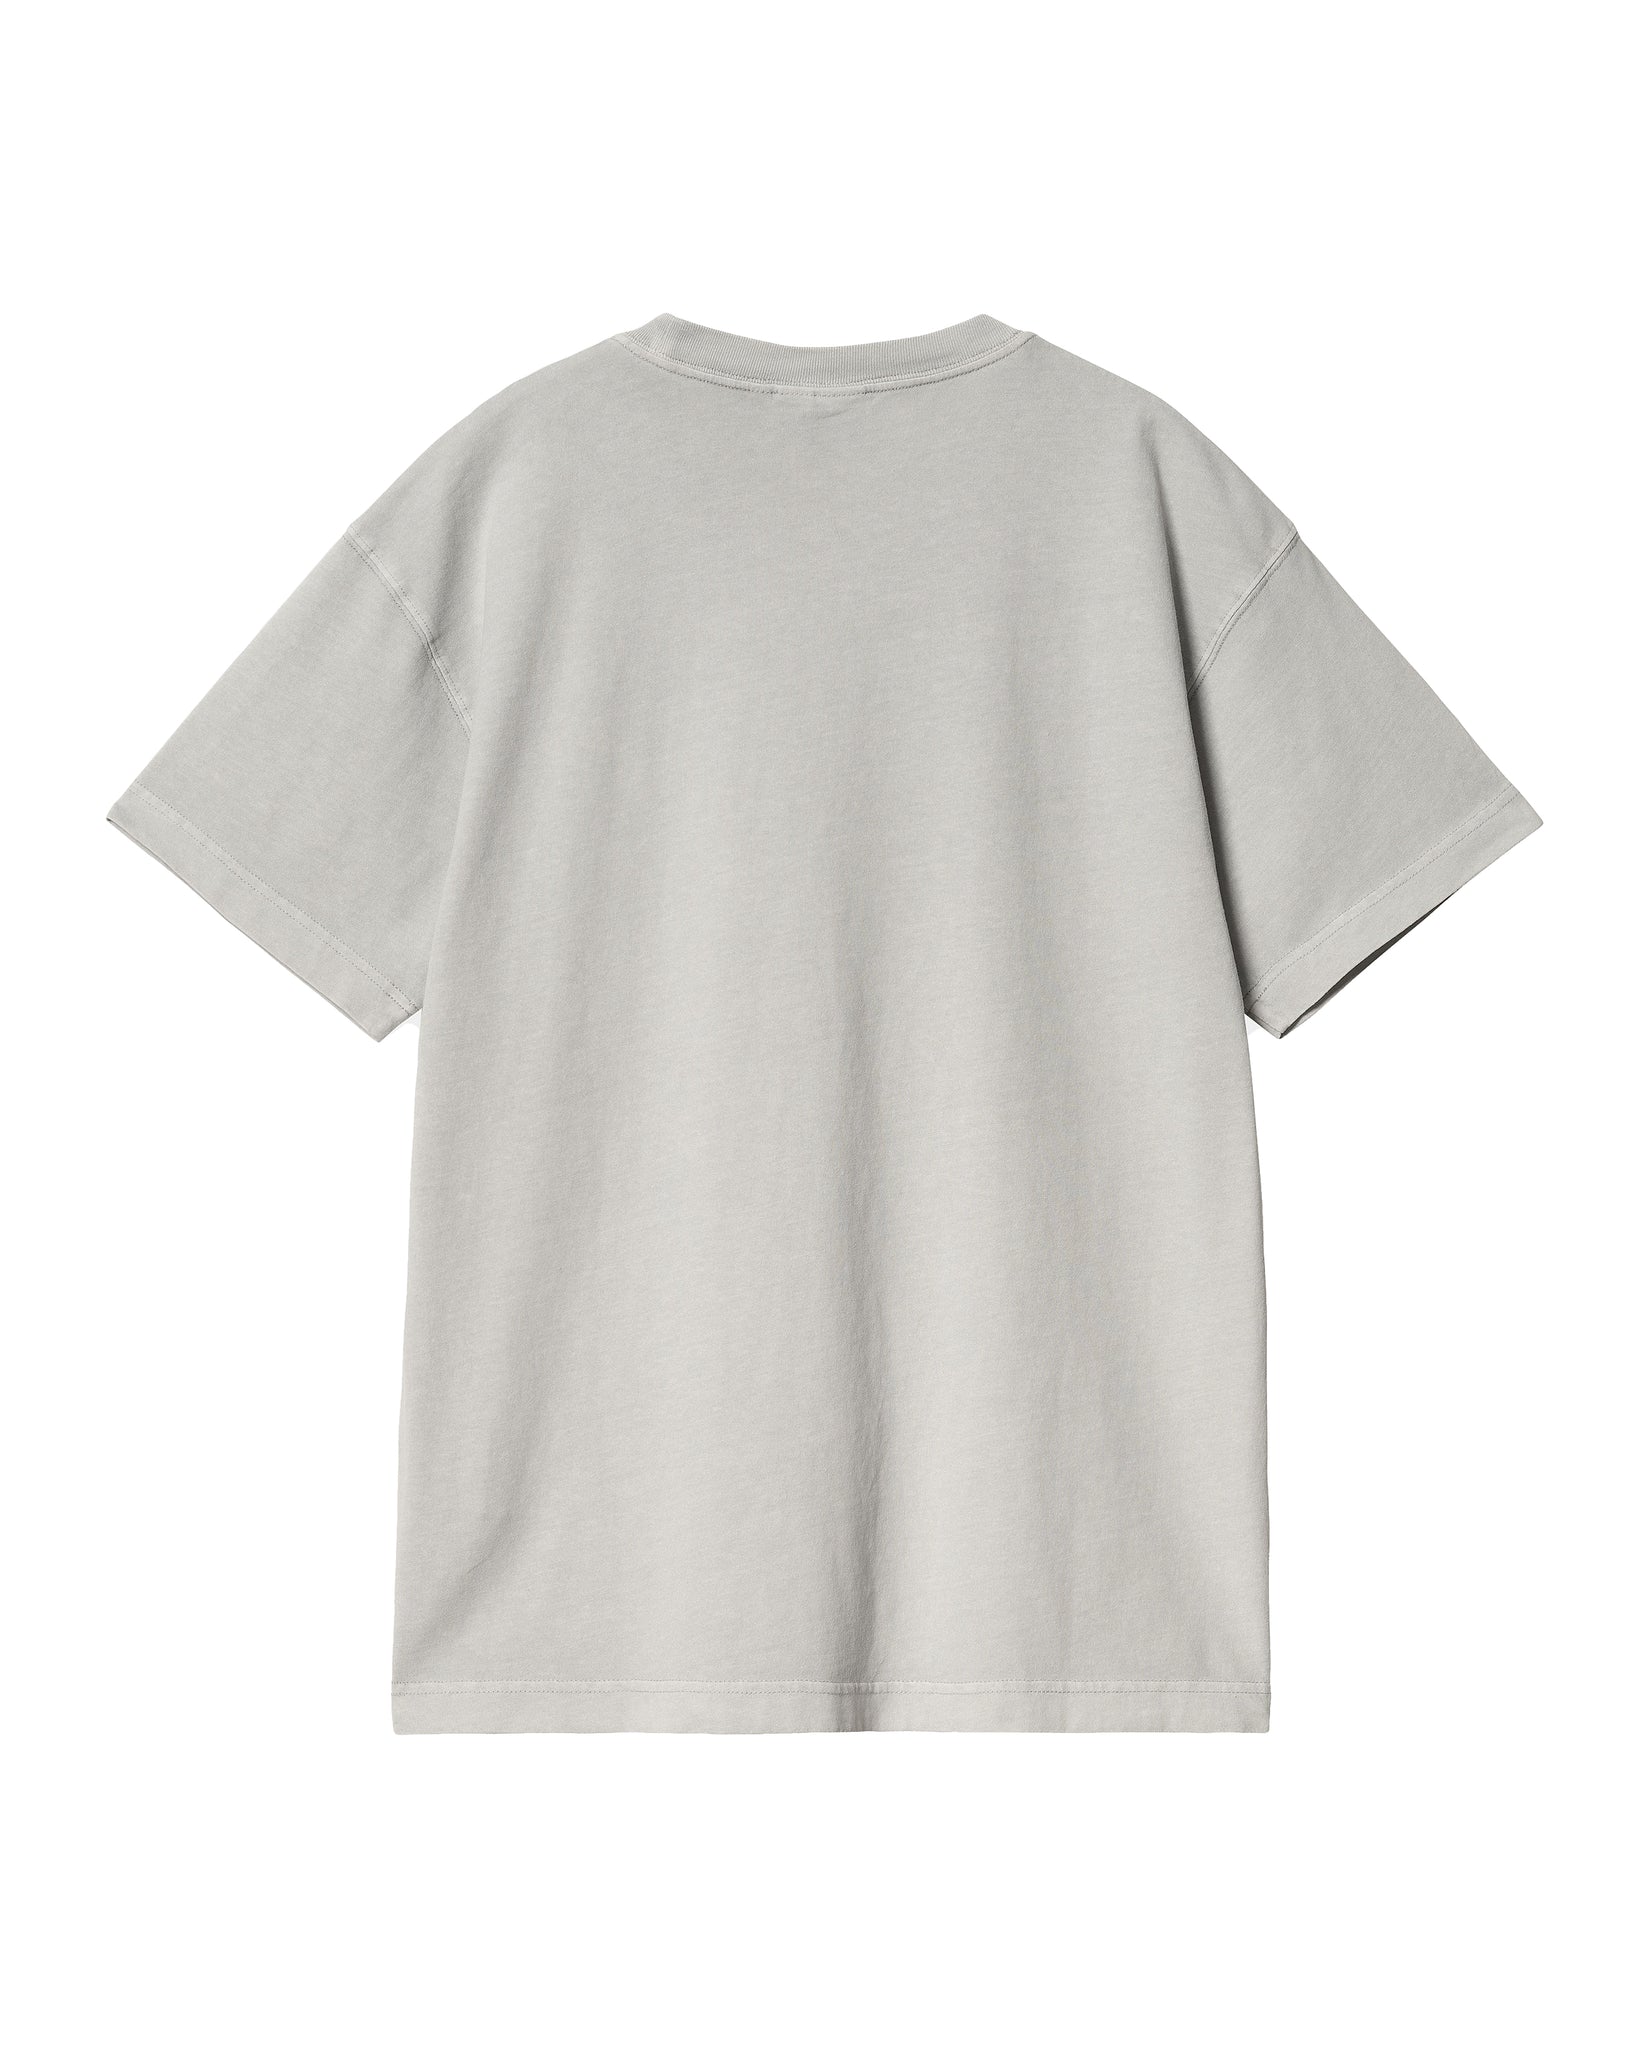 SS Nelson T-Shirt - Sonic Silver (garment dyed)